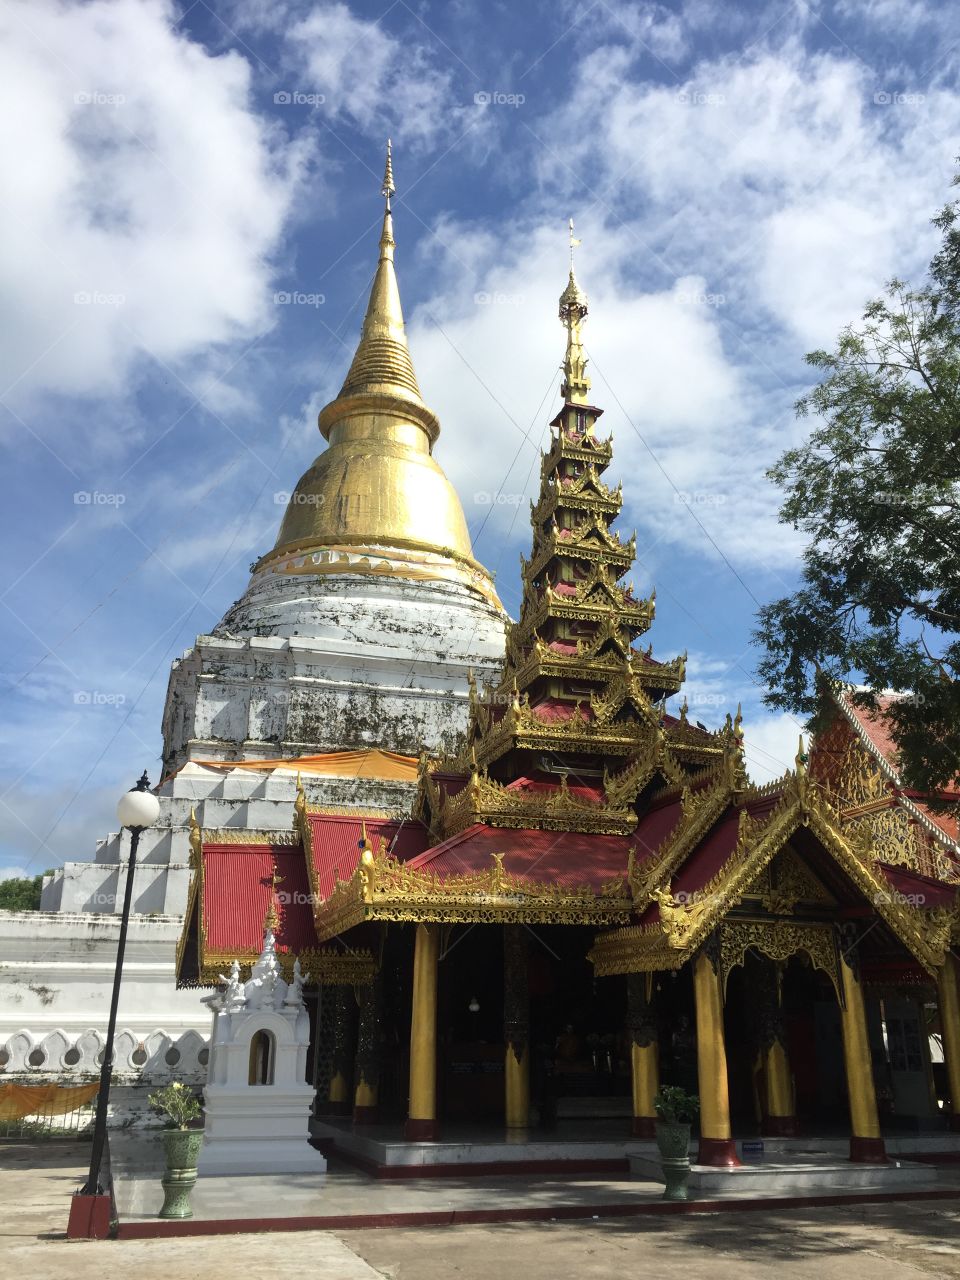 Wat Phra Kaew Don Tao
Lampang